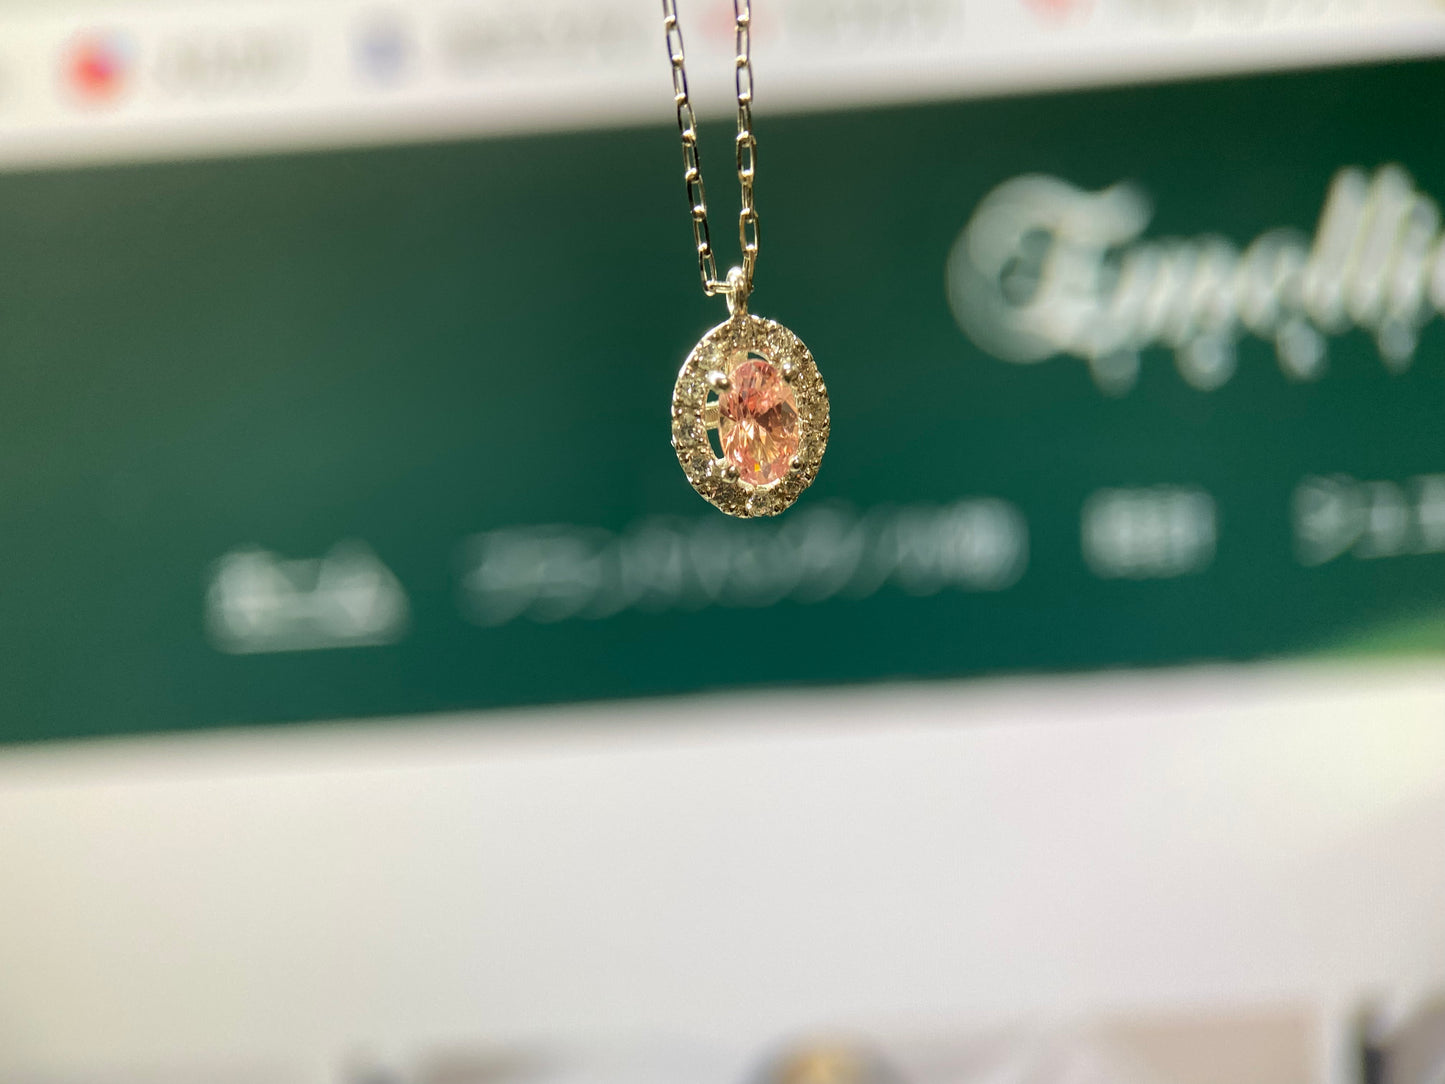 New] [Rare Stone] Papalachian Sapphire Necklace Jewelry